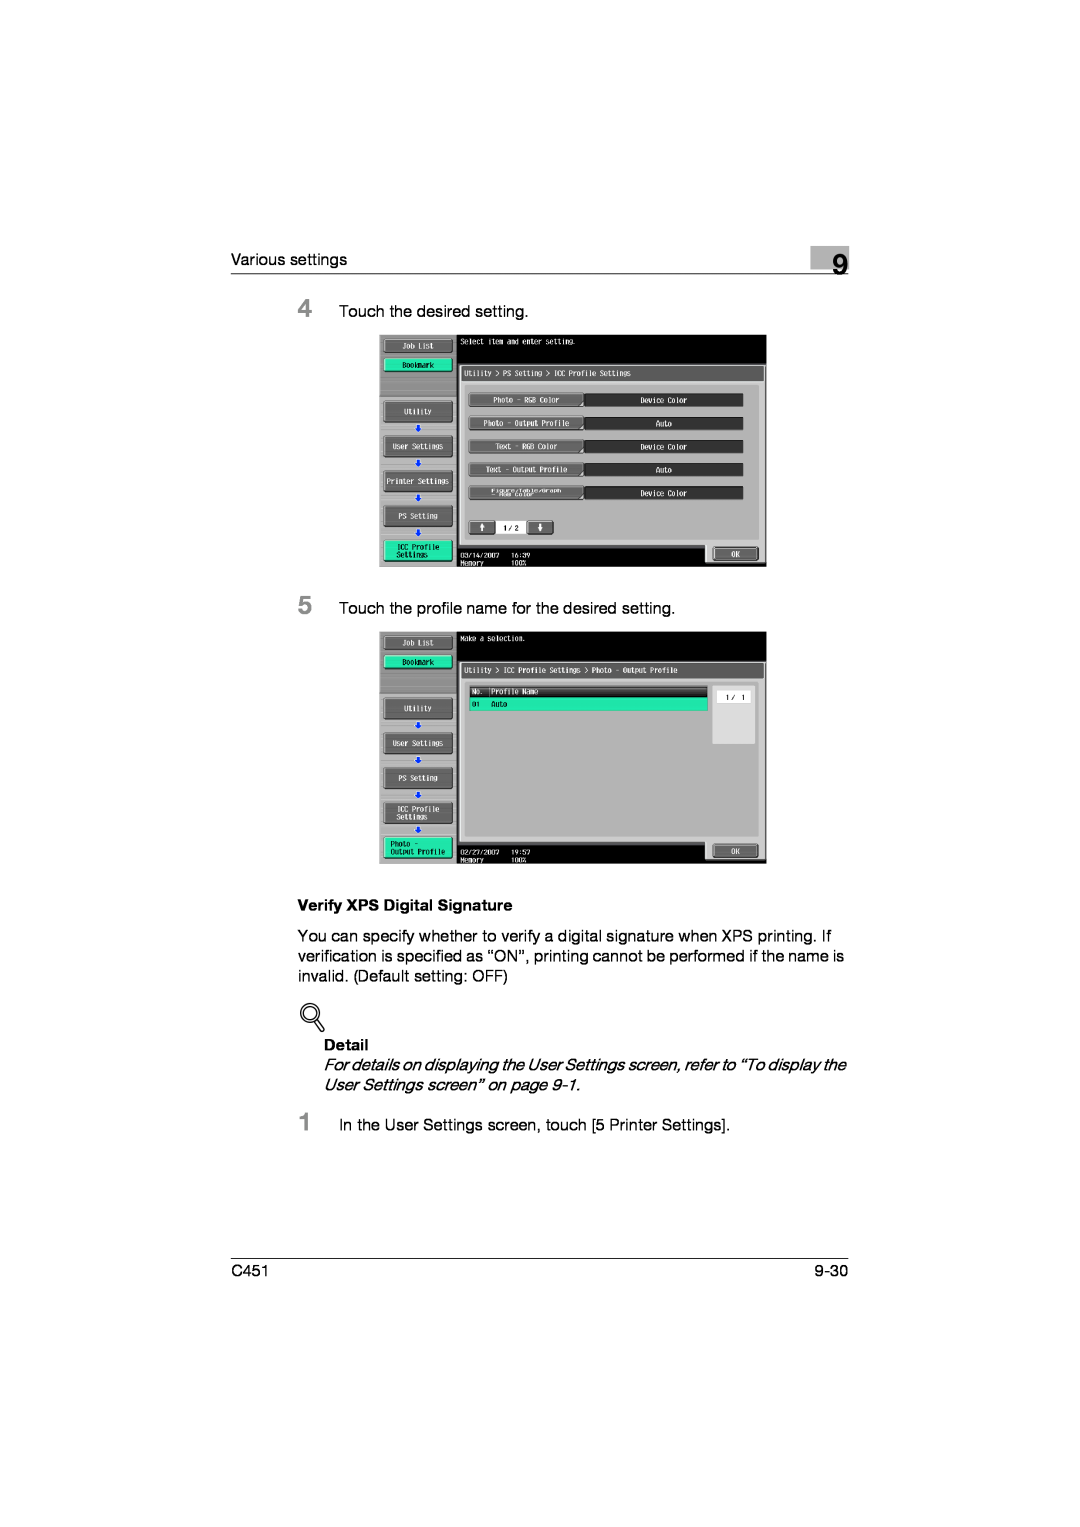 Konica Minolta C451 manual Verify XPS Digital Signature, Detail 